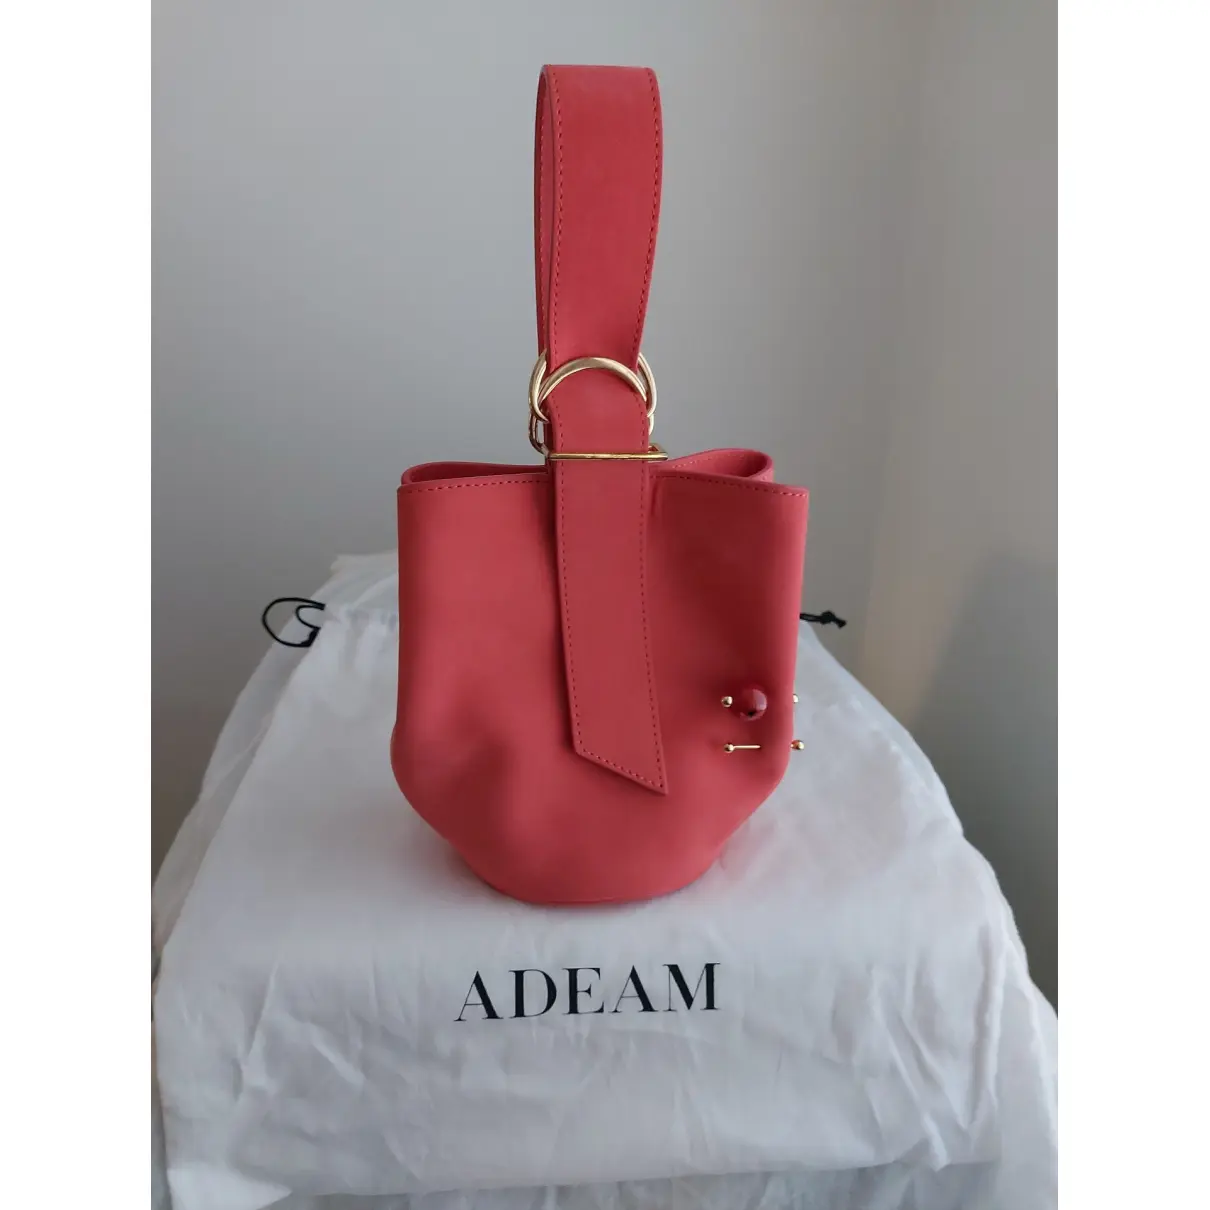 Leather handbag Adeam